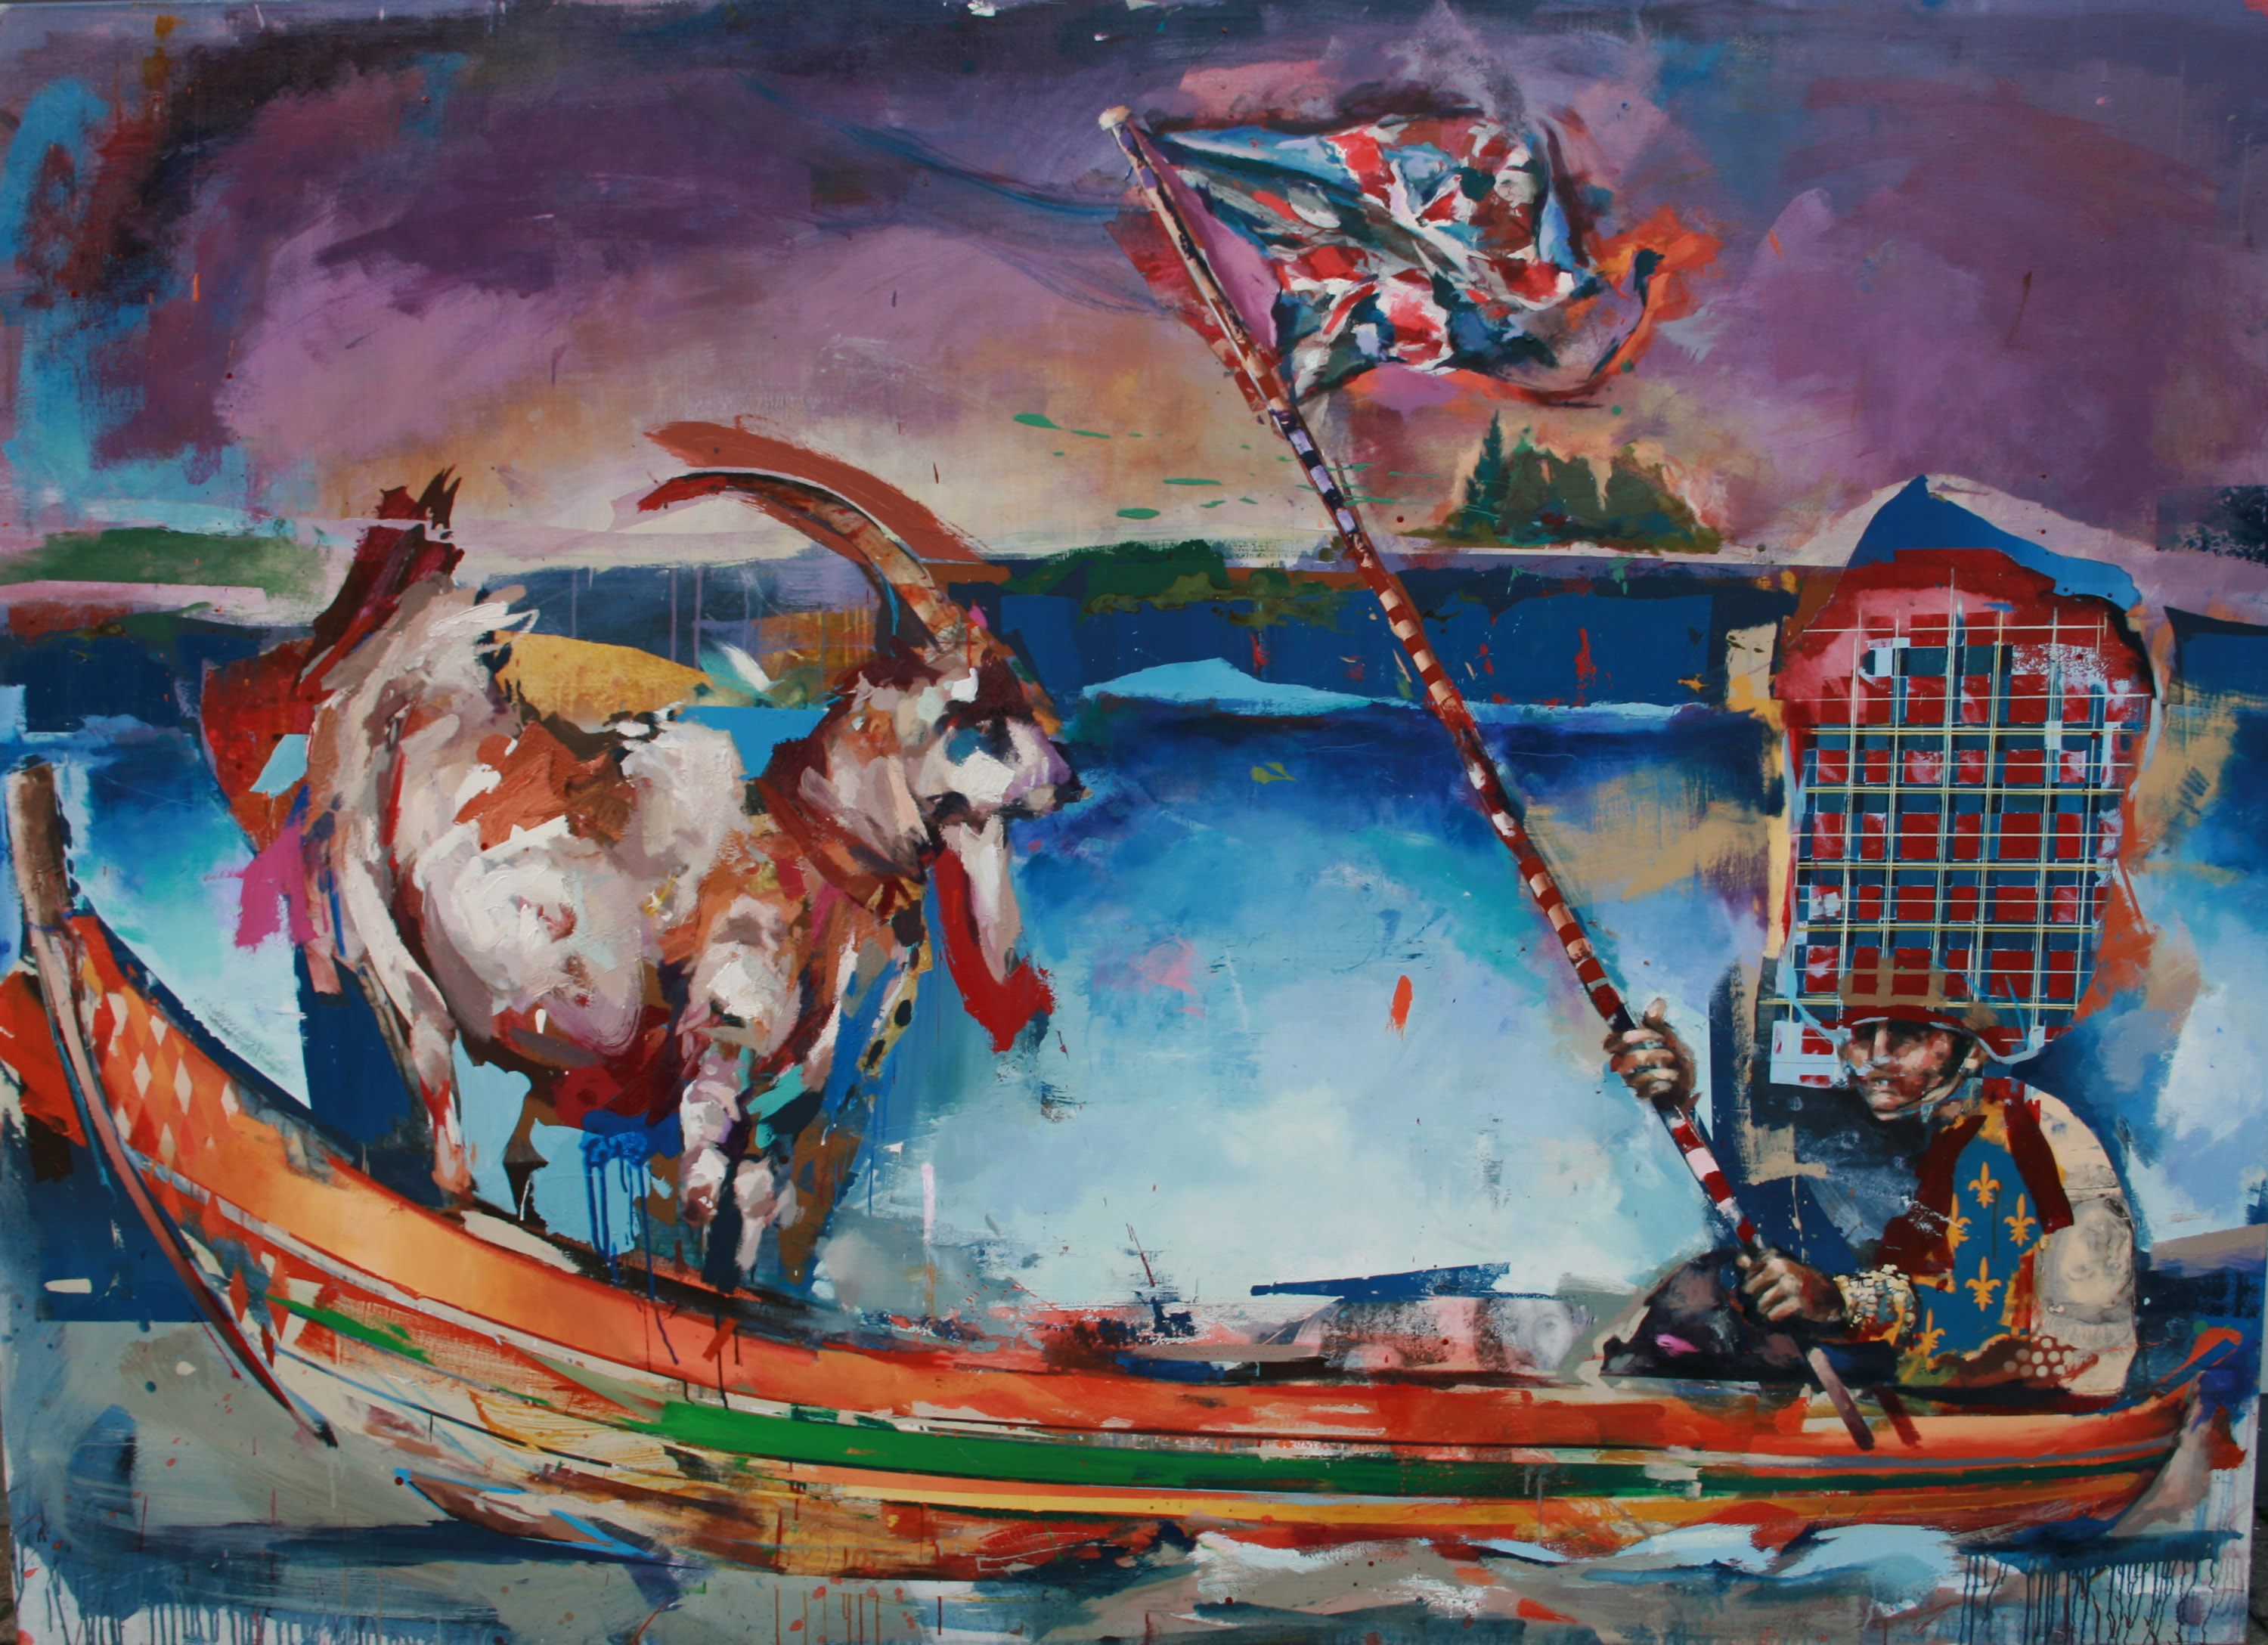 God Save The Queen - Öl und Acryl auf Leinwand - 2019 - 110 x 80 cm -  Exemplare